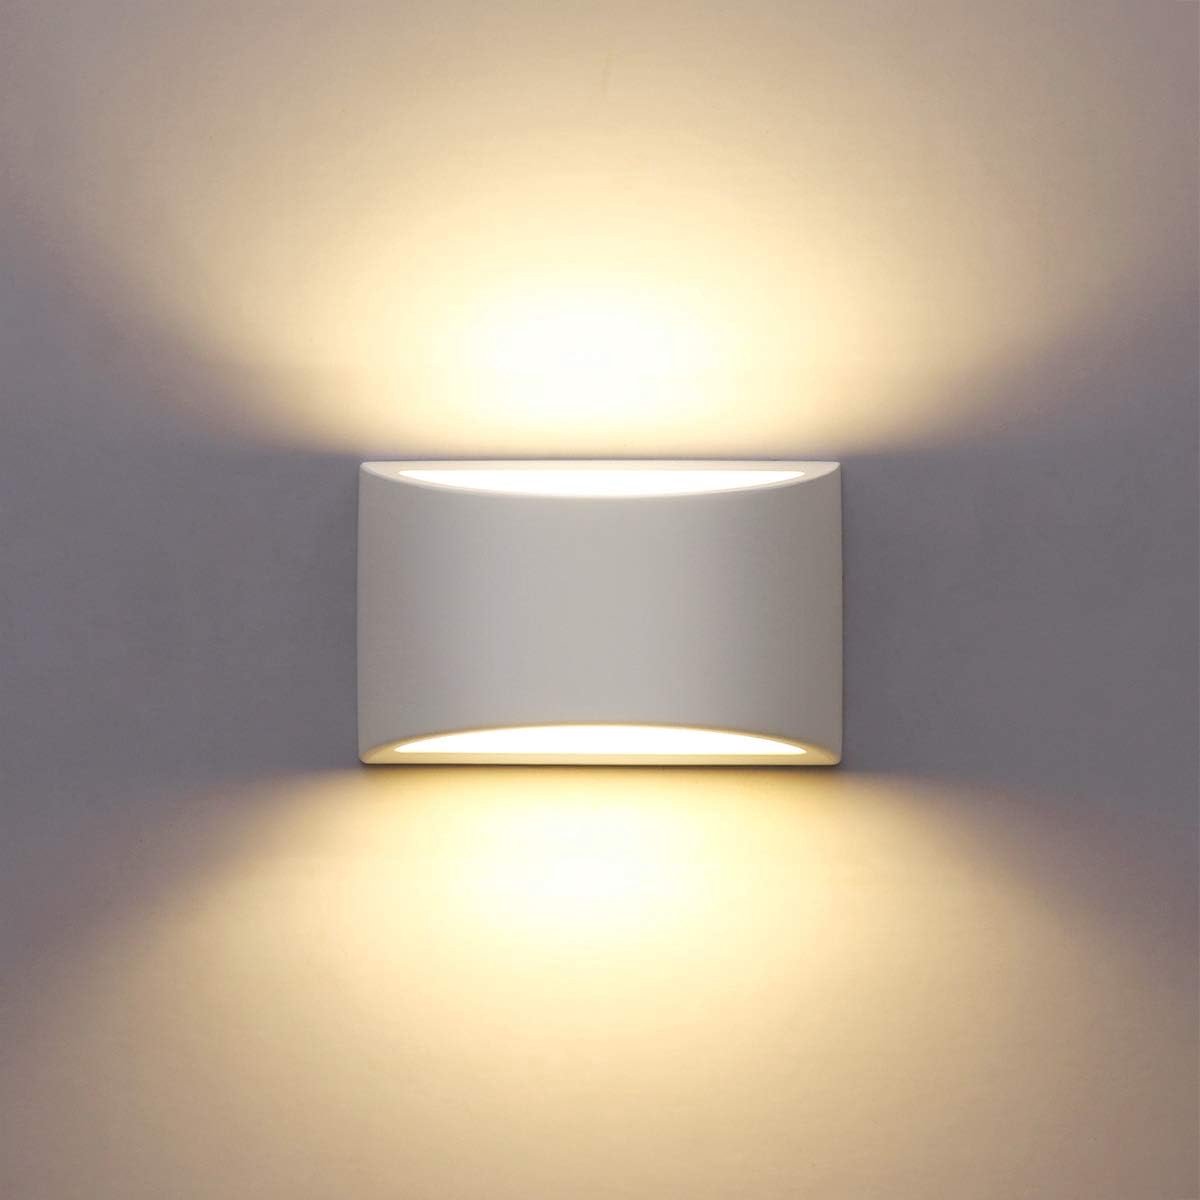 Led-wandlamp voor binnen, 7 W, wit, gipslamp, modern design, wandlamp, led licht omhoog en omlaag, warmwit, voor badkamer, woonkamer, slaapkamer, hal (G9 ledlamp inbegrepen)